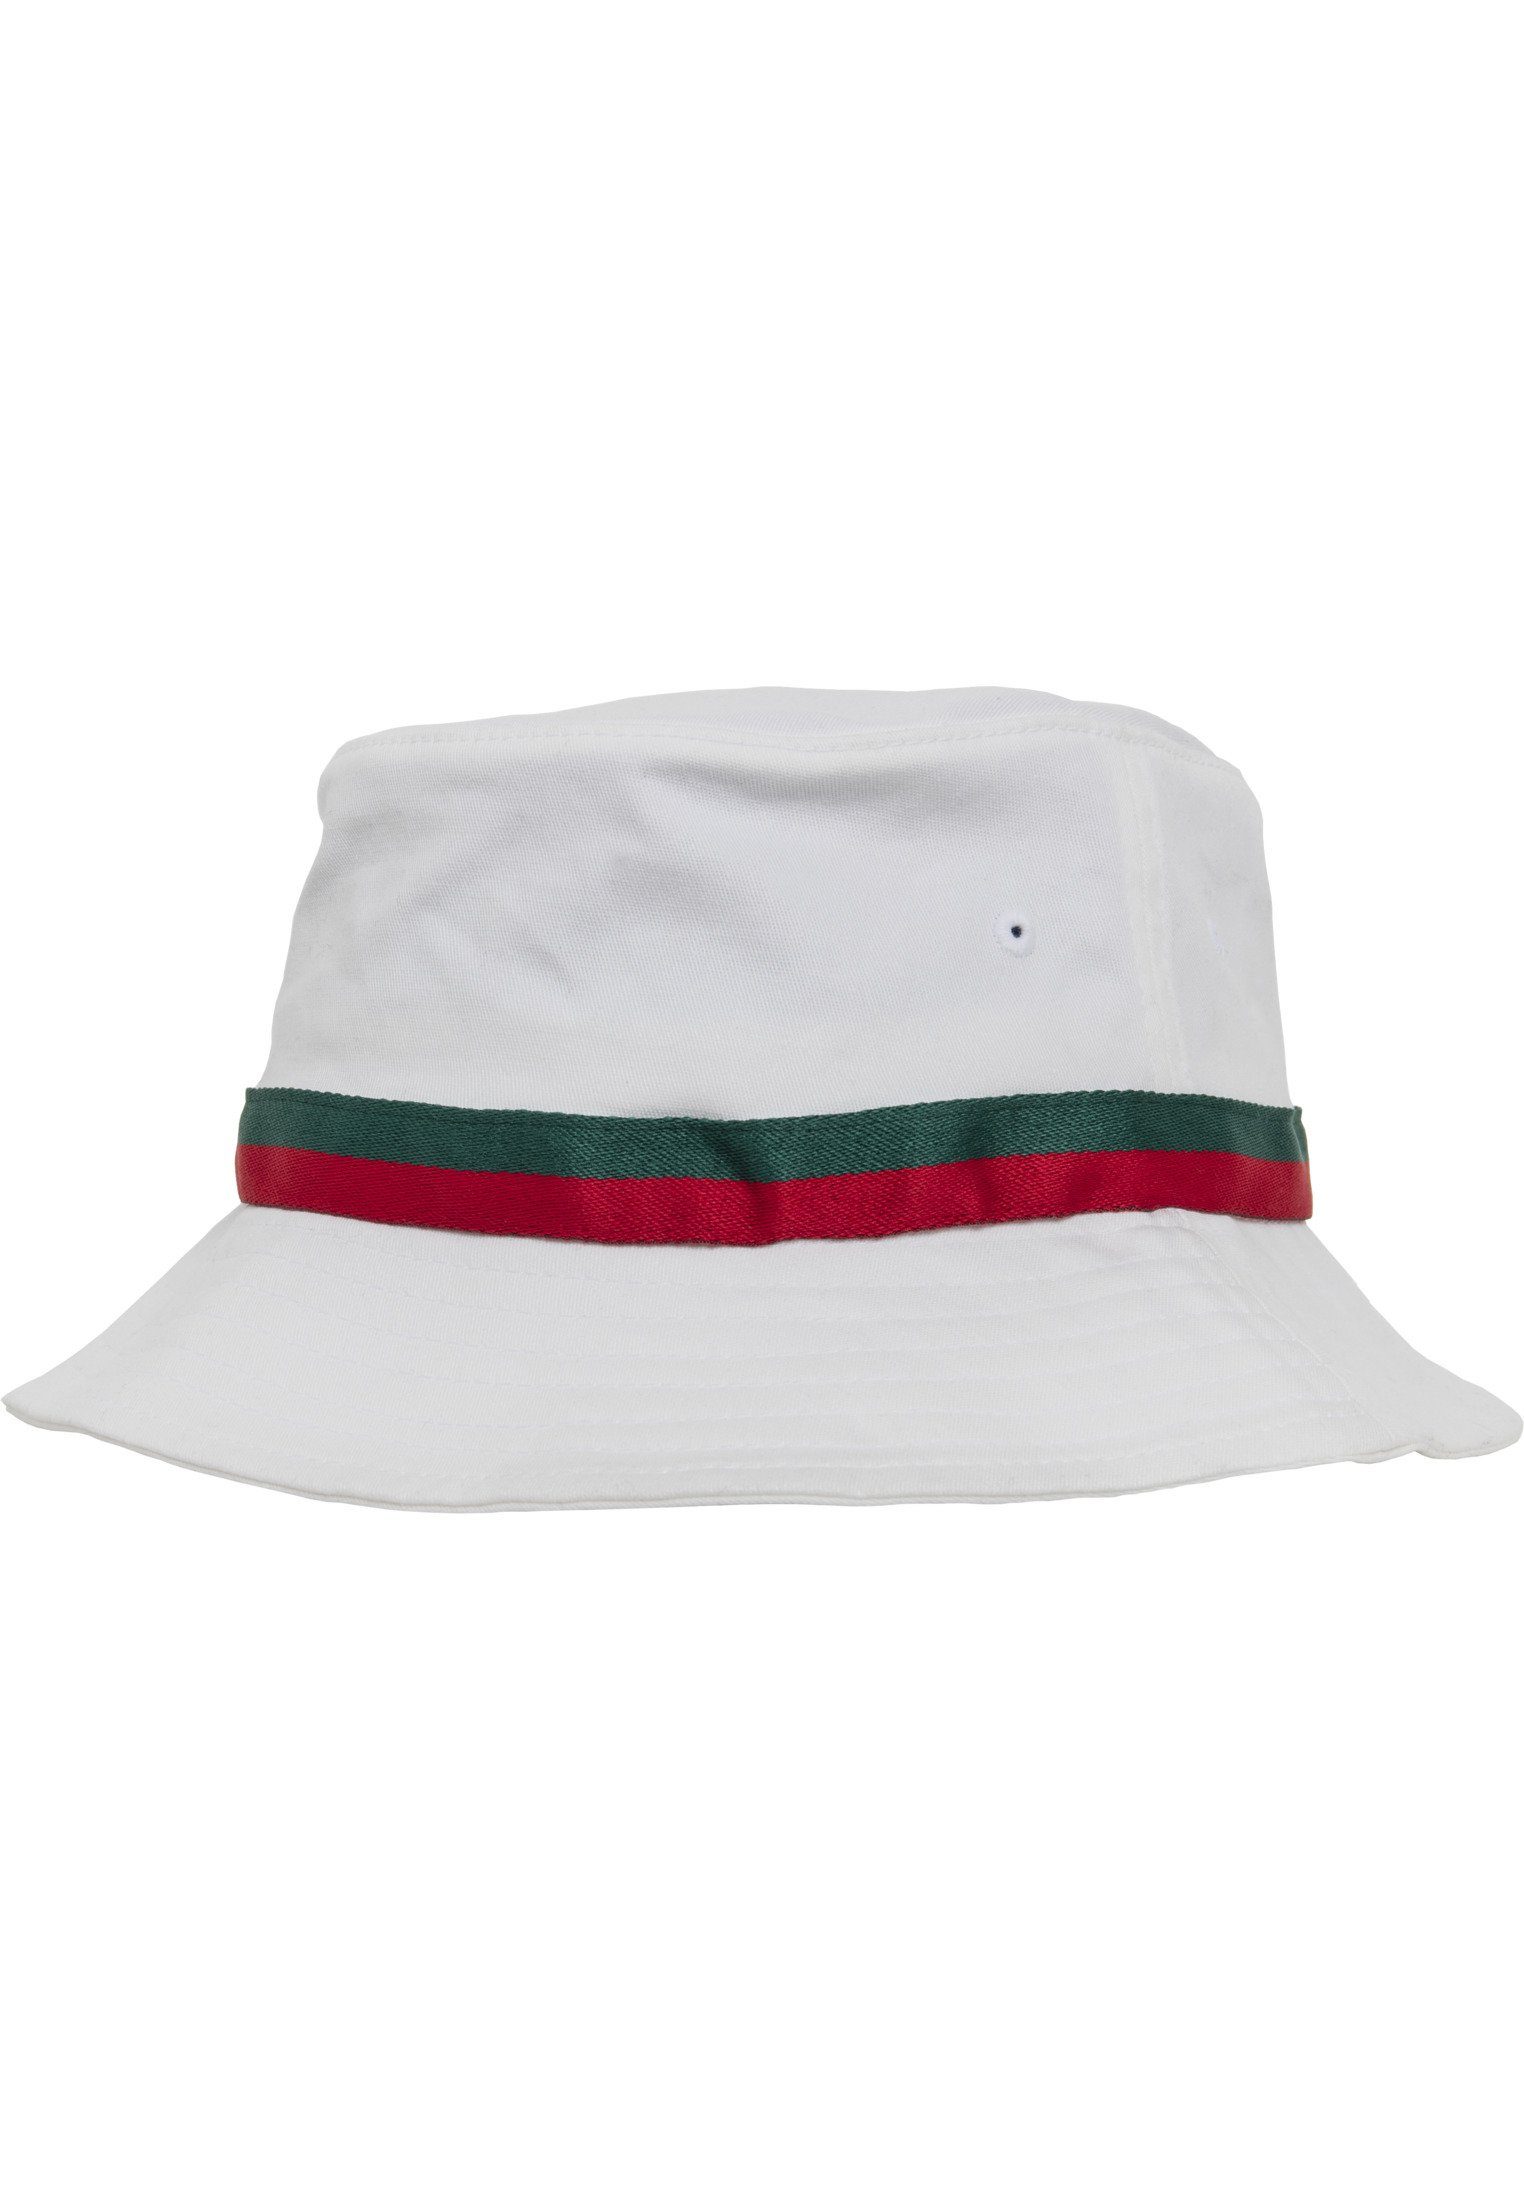 Flexfit Flex Cap Bucket Hat white/firered/green Stripe Bucket Hat